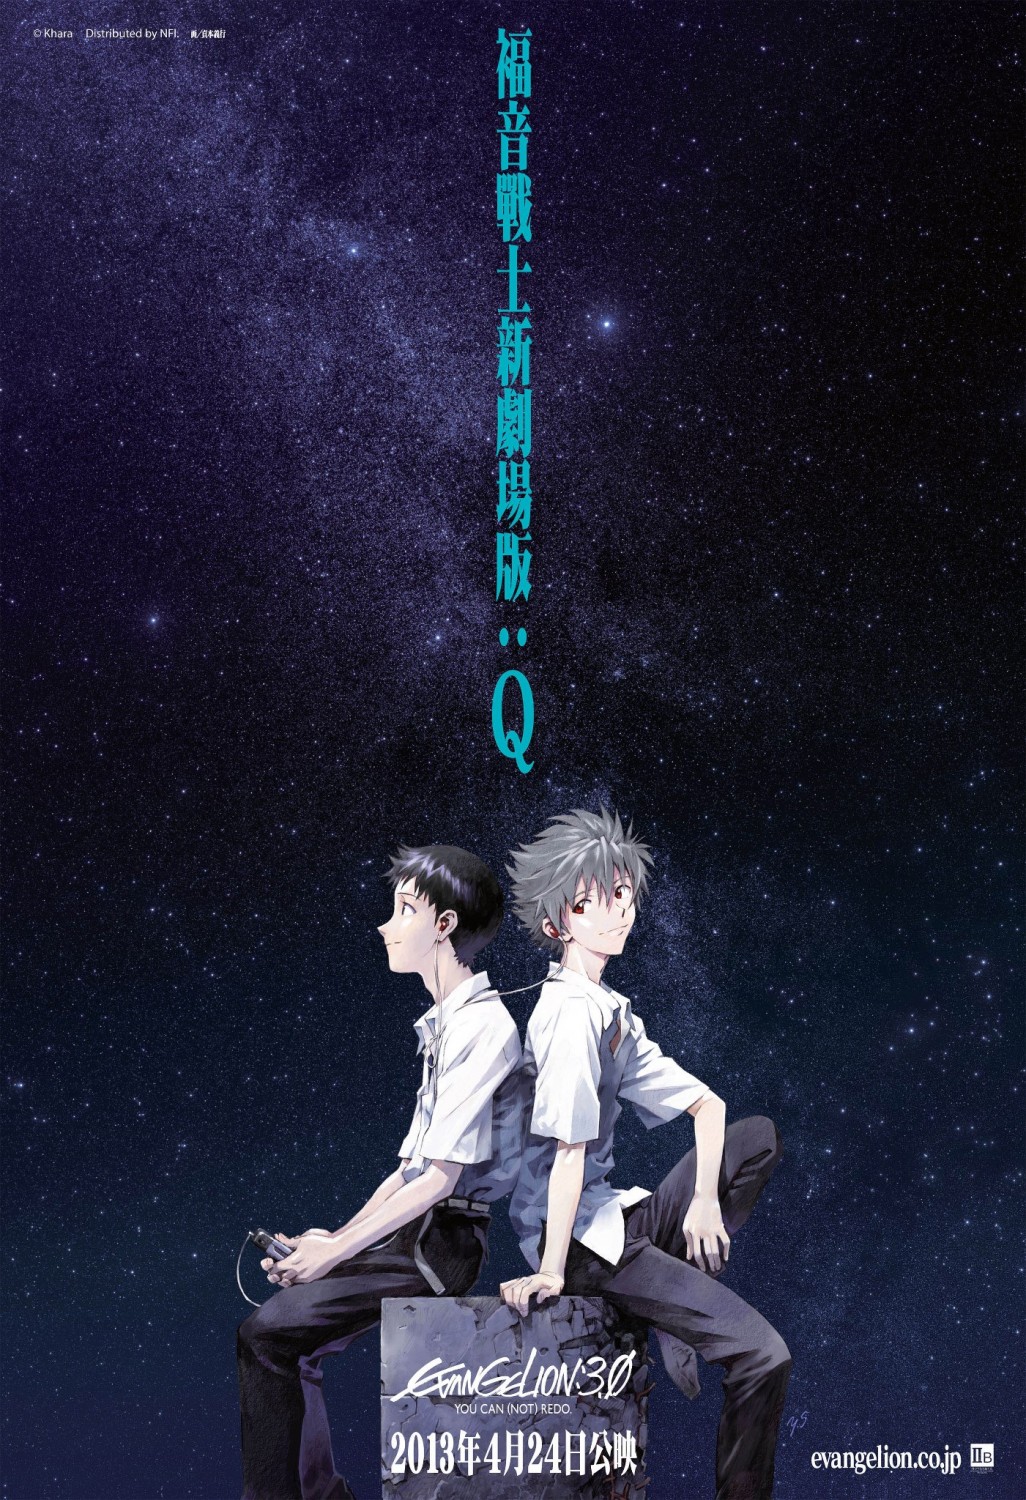 Extra Large Movie Poster Image for Evangelion Shin Gekijôban: Kyu (#1 of 2)